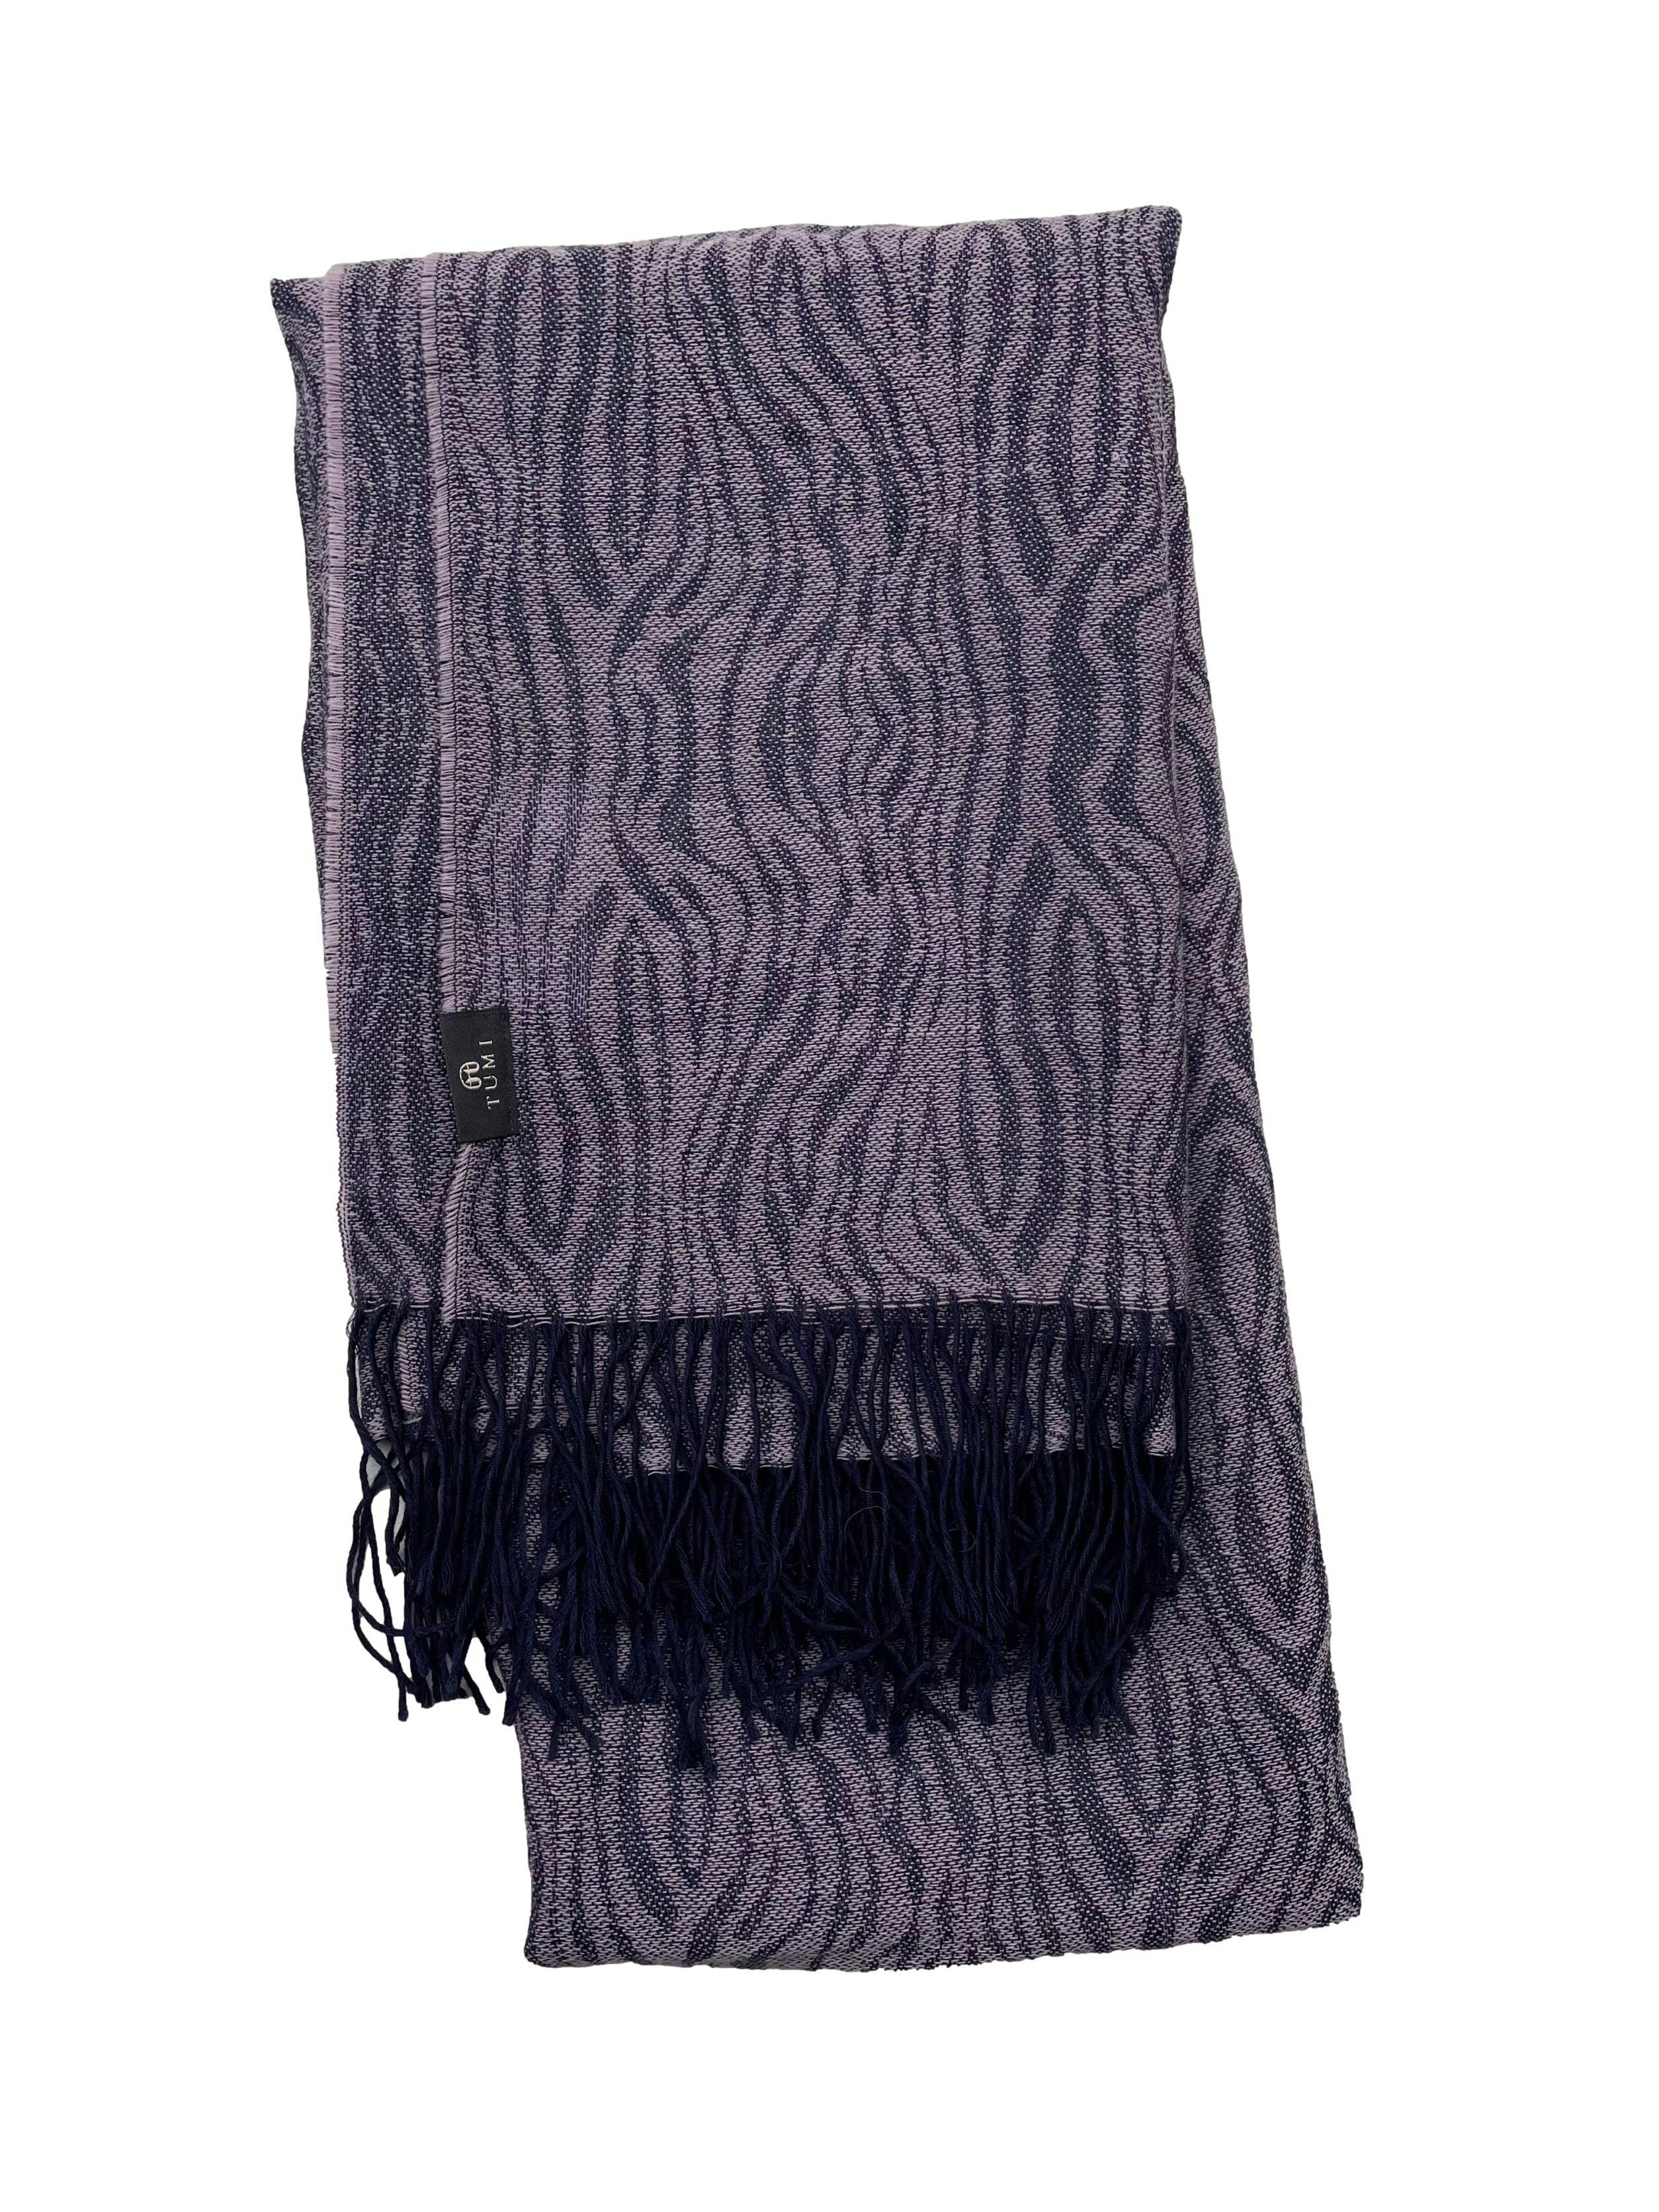 Bufanda Tumi 92% lana 8% nylon en ondas lila y azul con flecos. Medidas 90x170cm